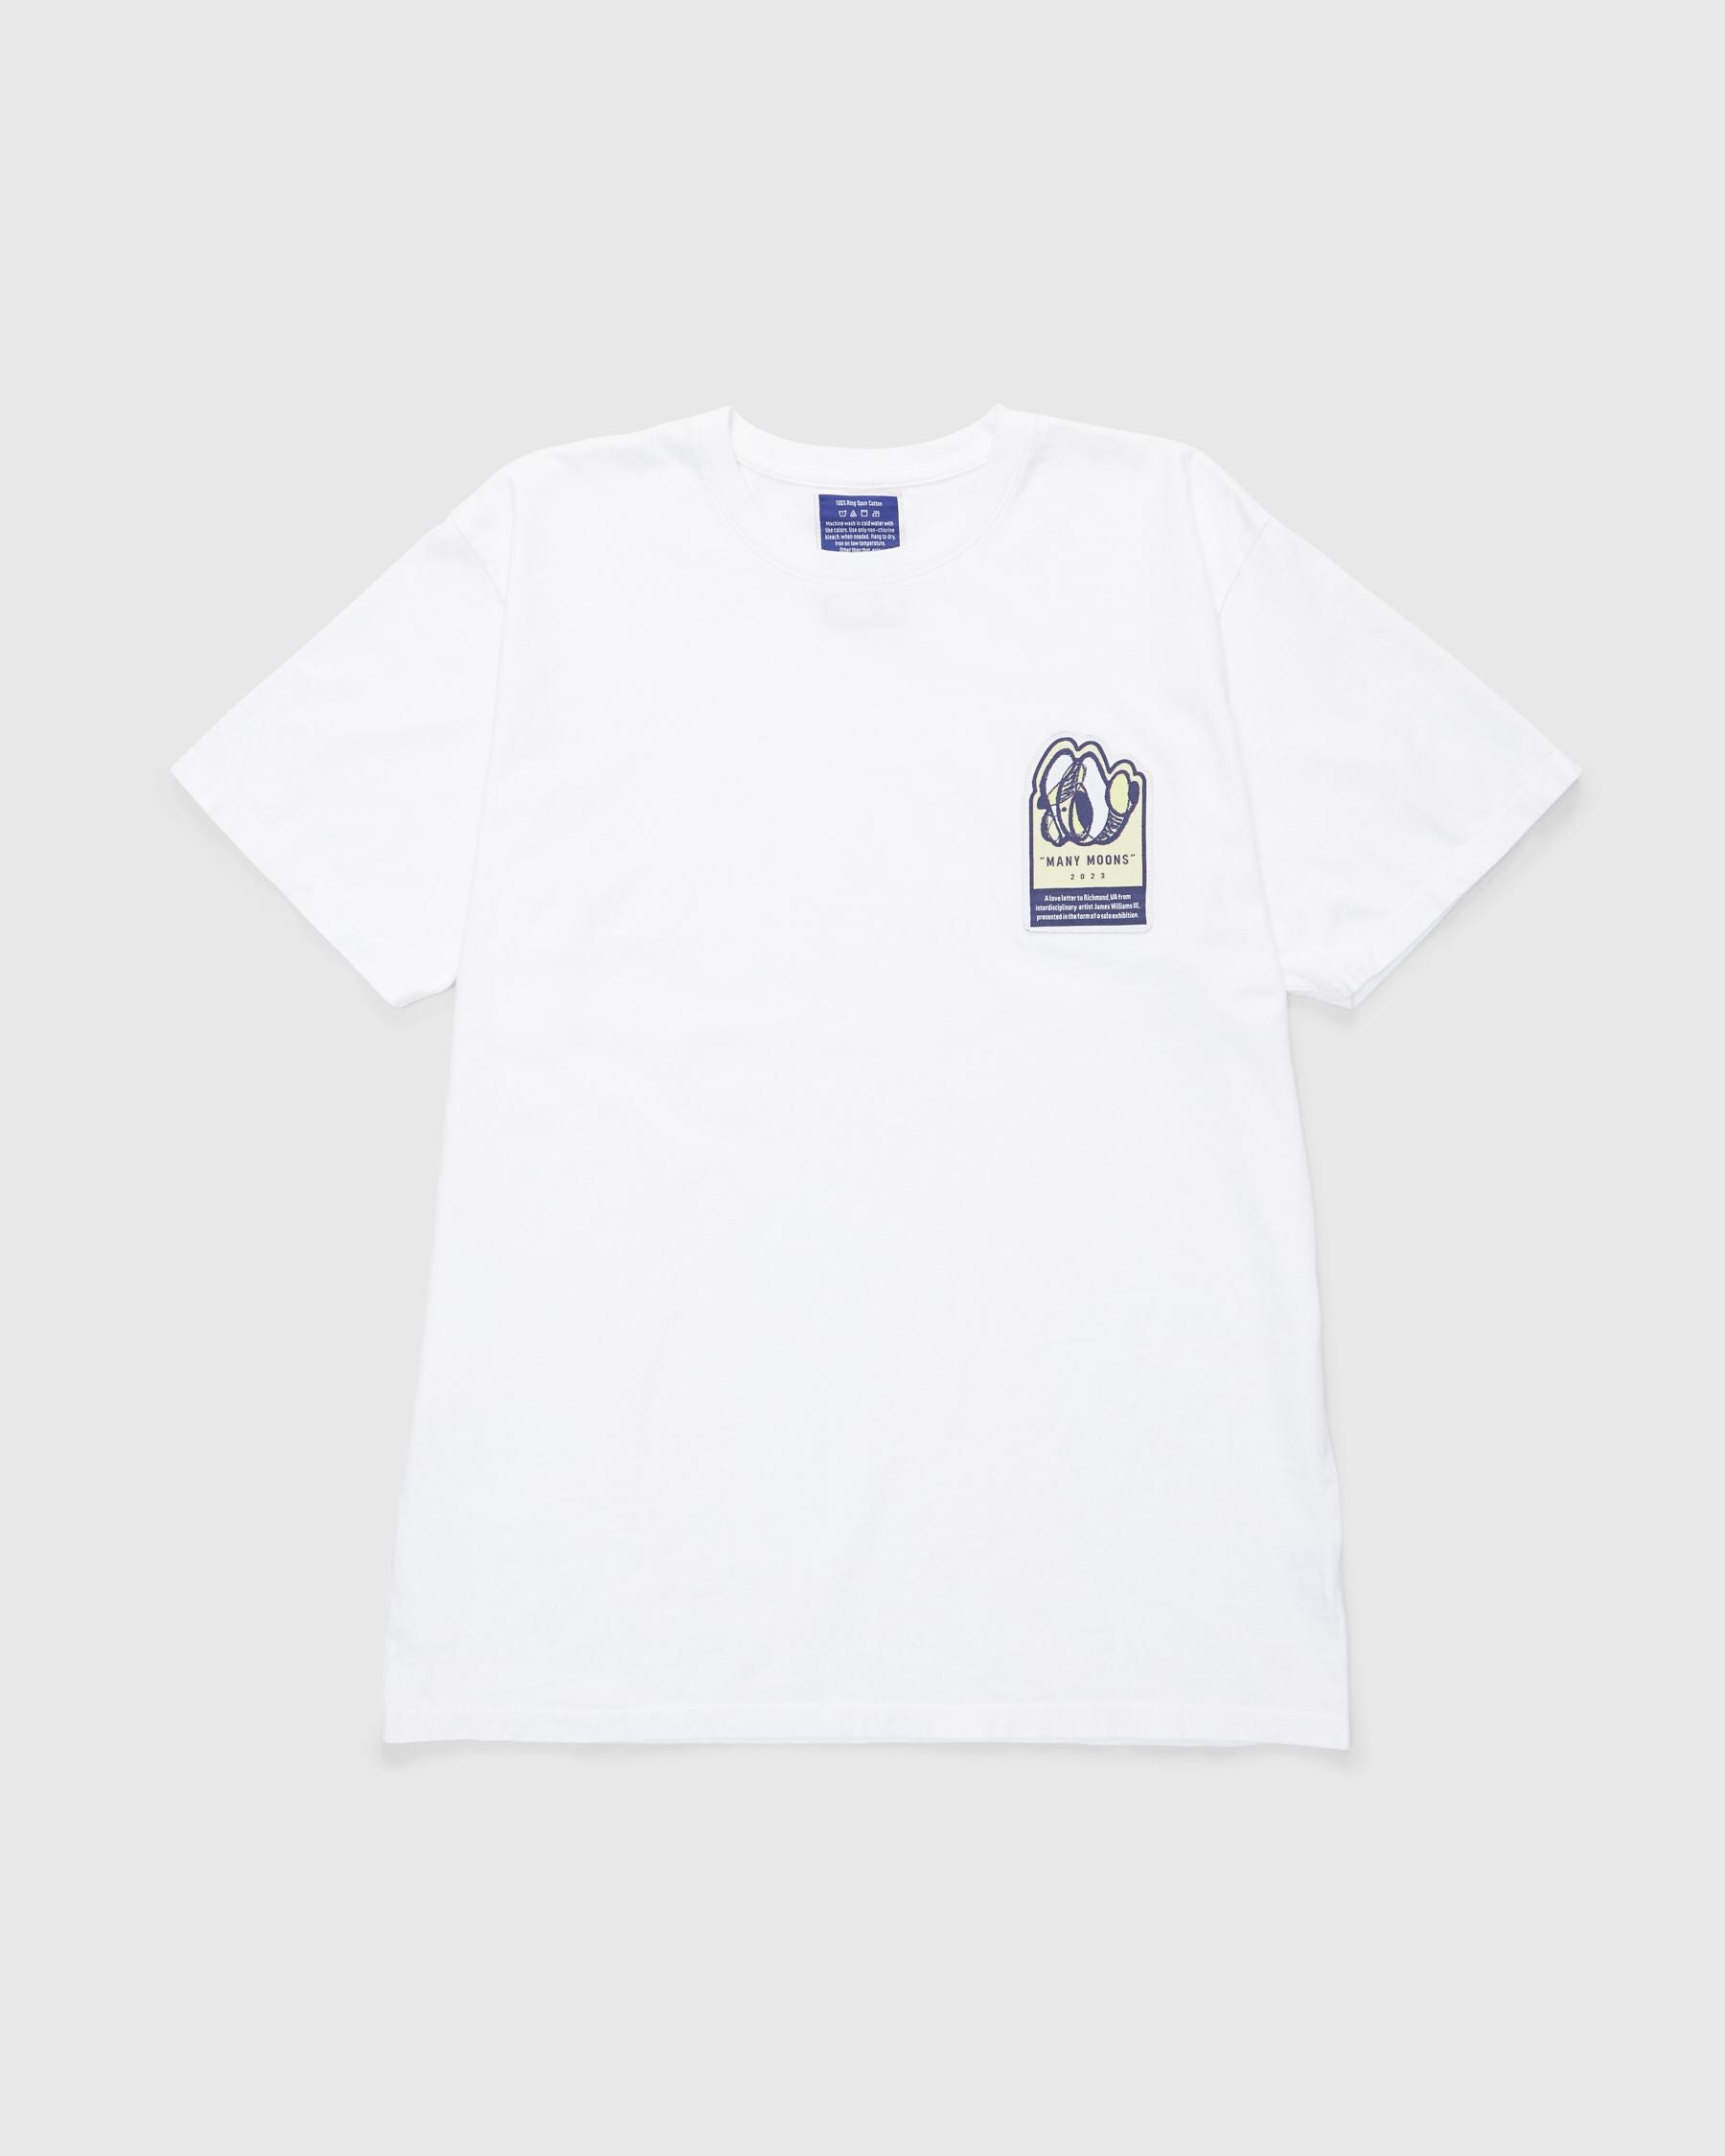 OPENhouse: "A Love Letter" T-Shirt